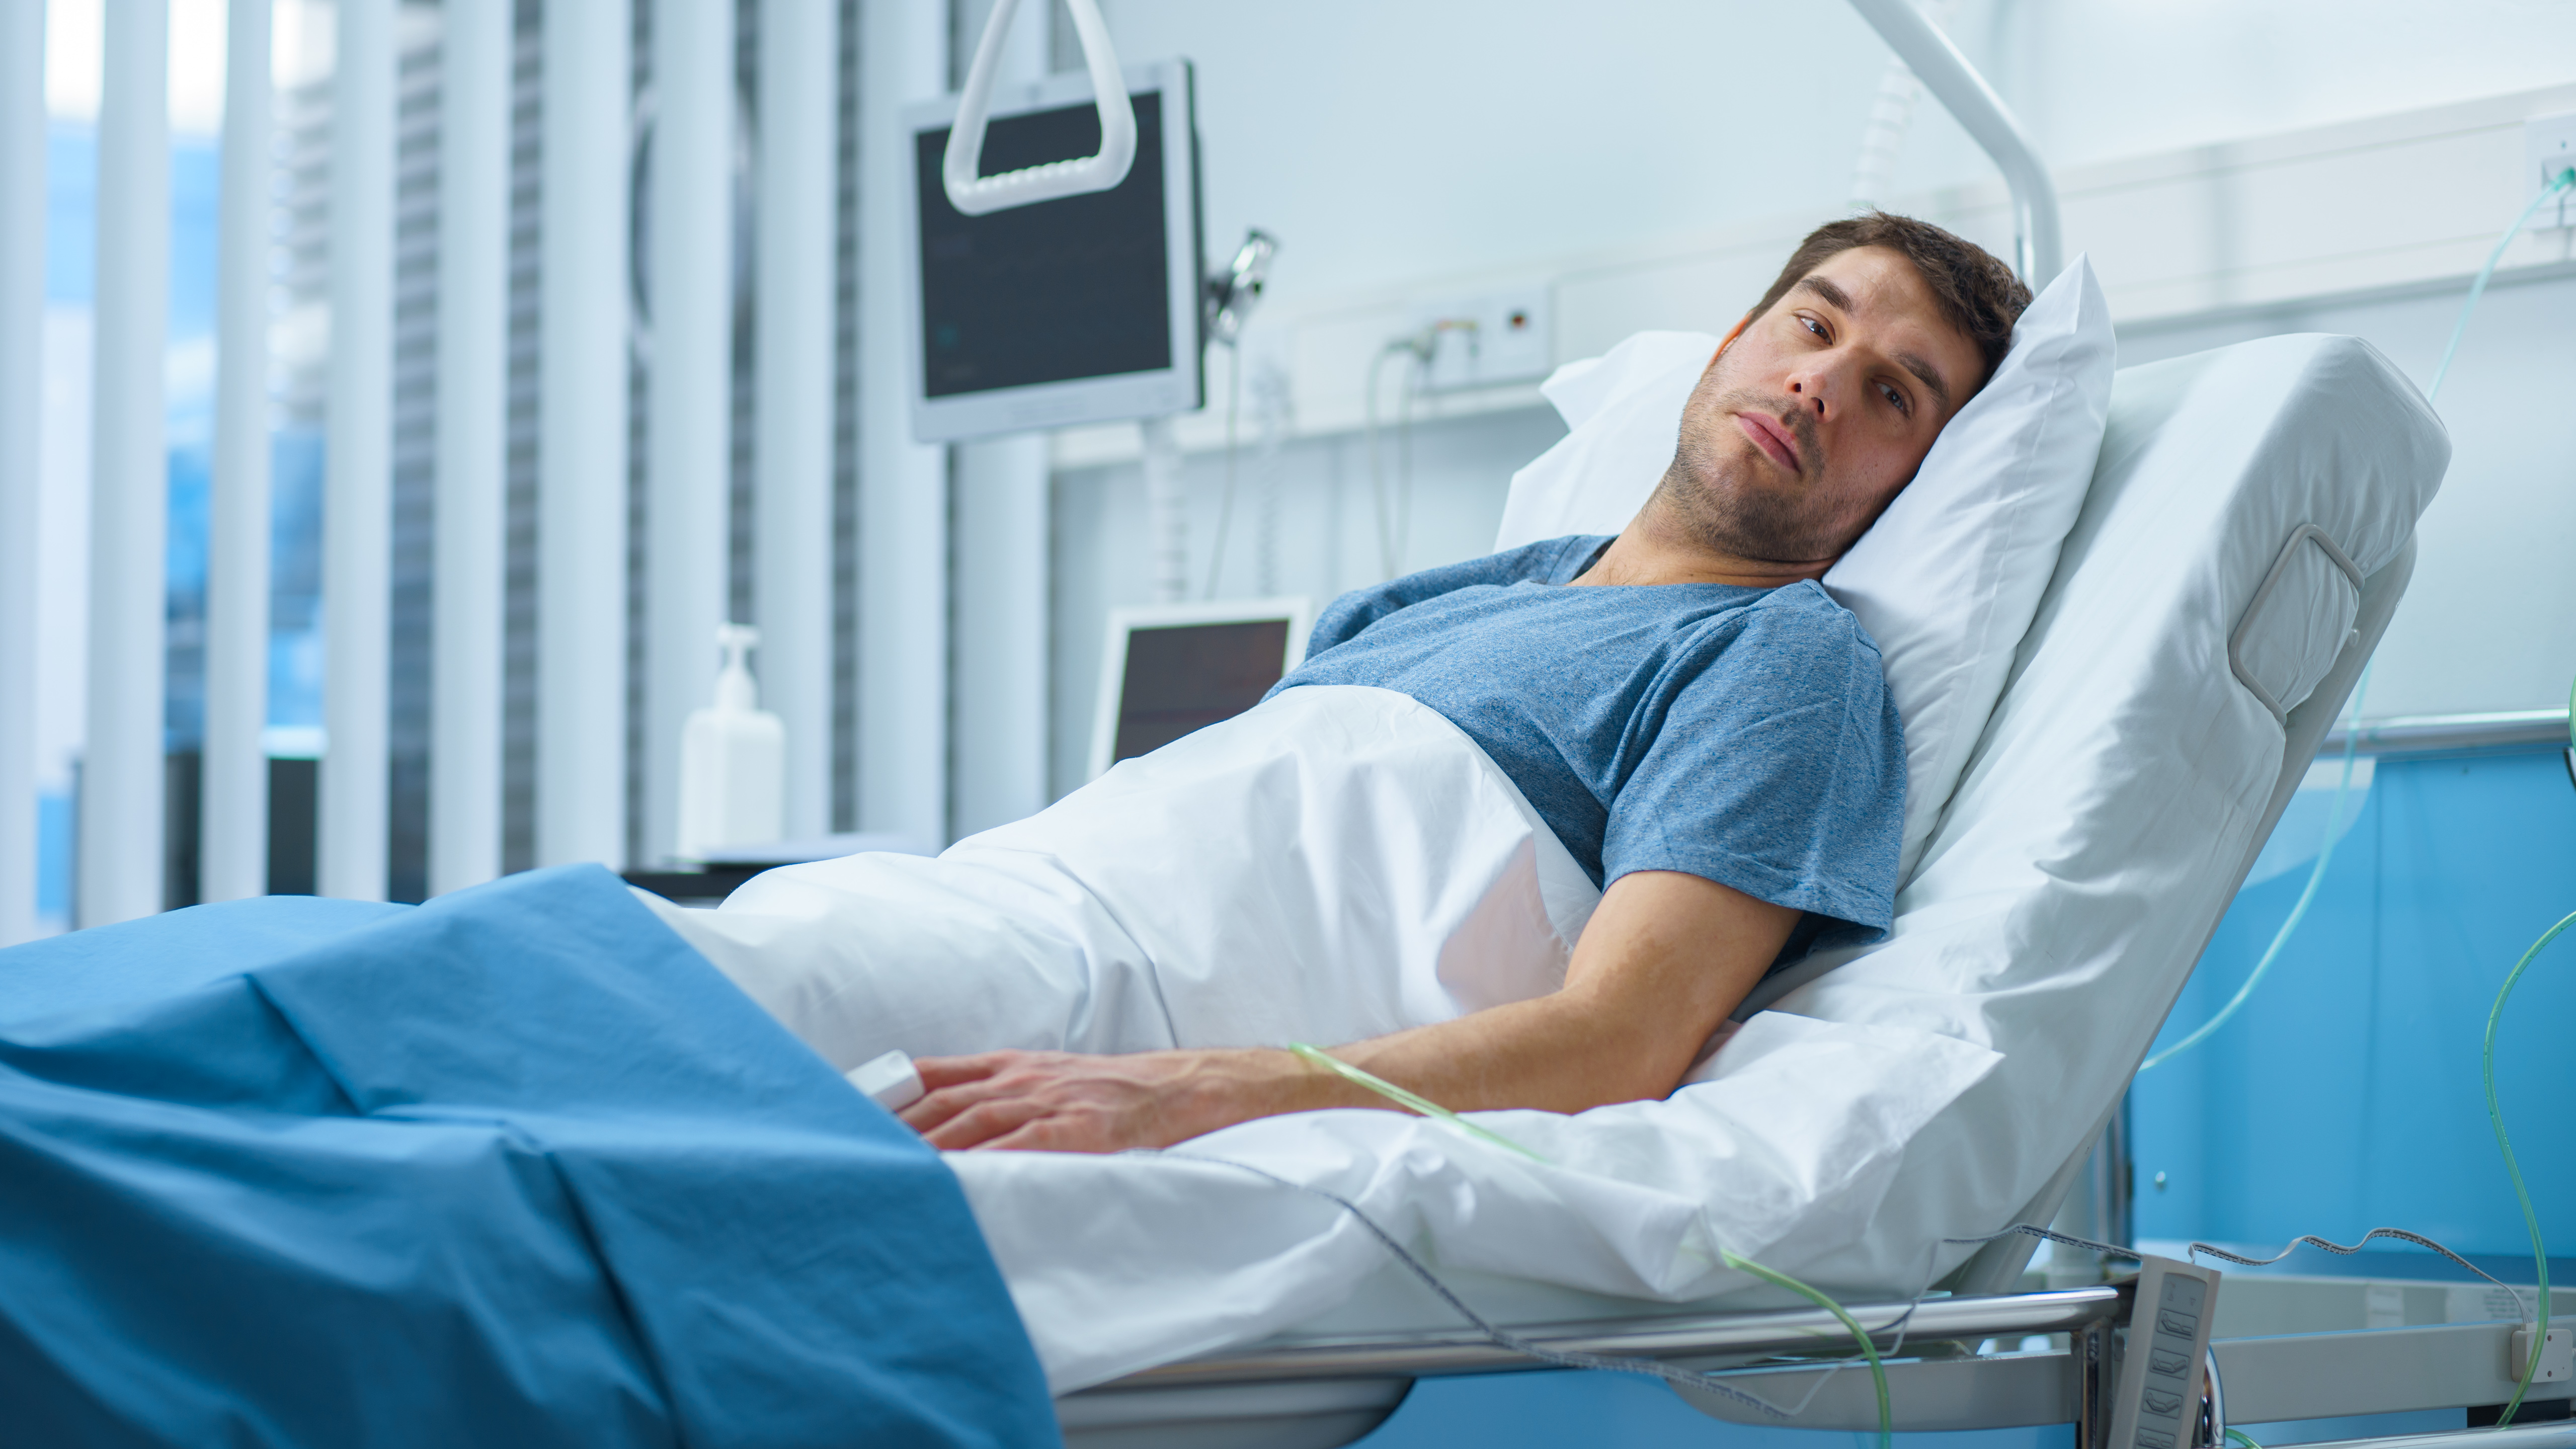 Hombre en sala de hospital | Fuente: Shutterstock.com